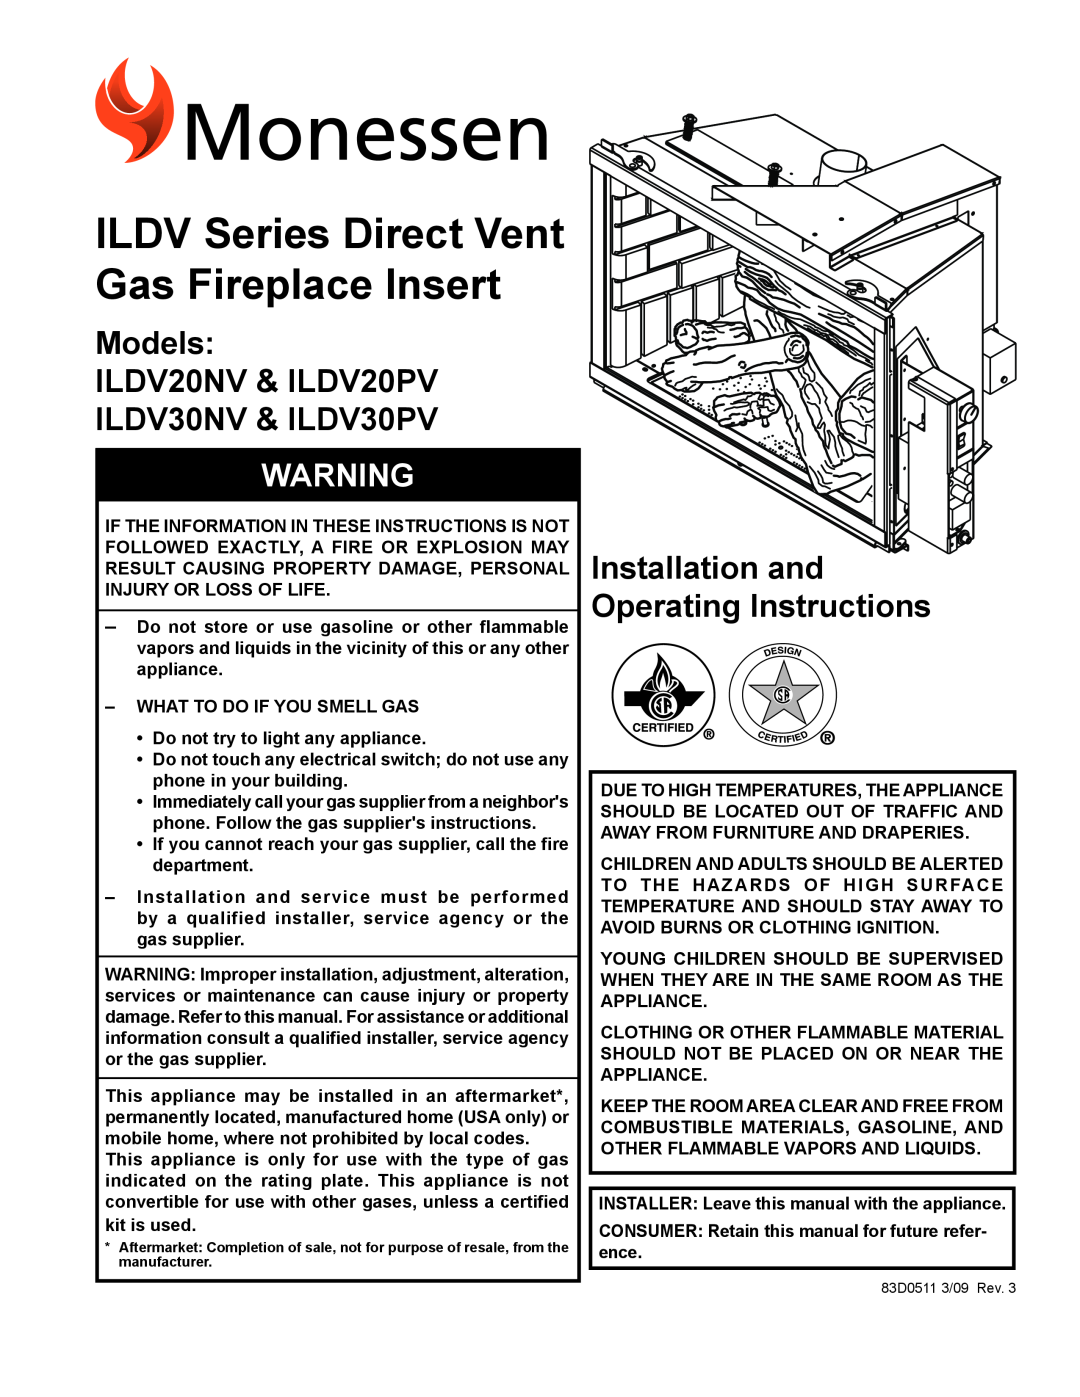 Monessen Hearth manual Models iLDV20NV & iLDV20PV ILDV30NV & ILDV30PV, Installation and Operating Instructions 